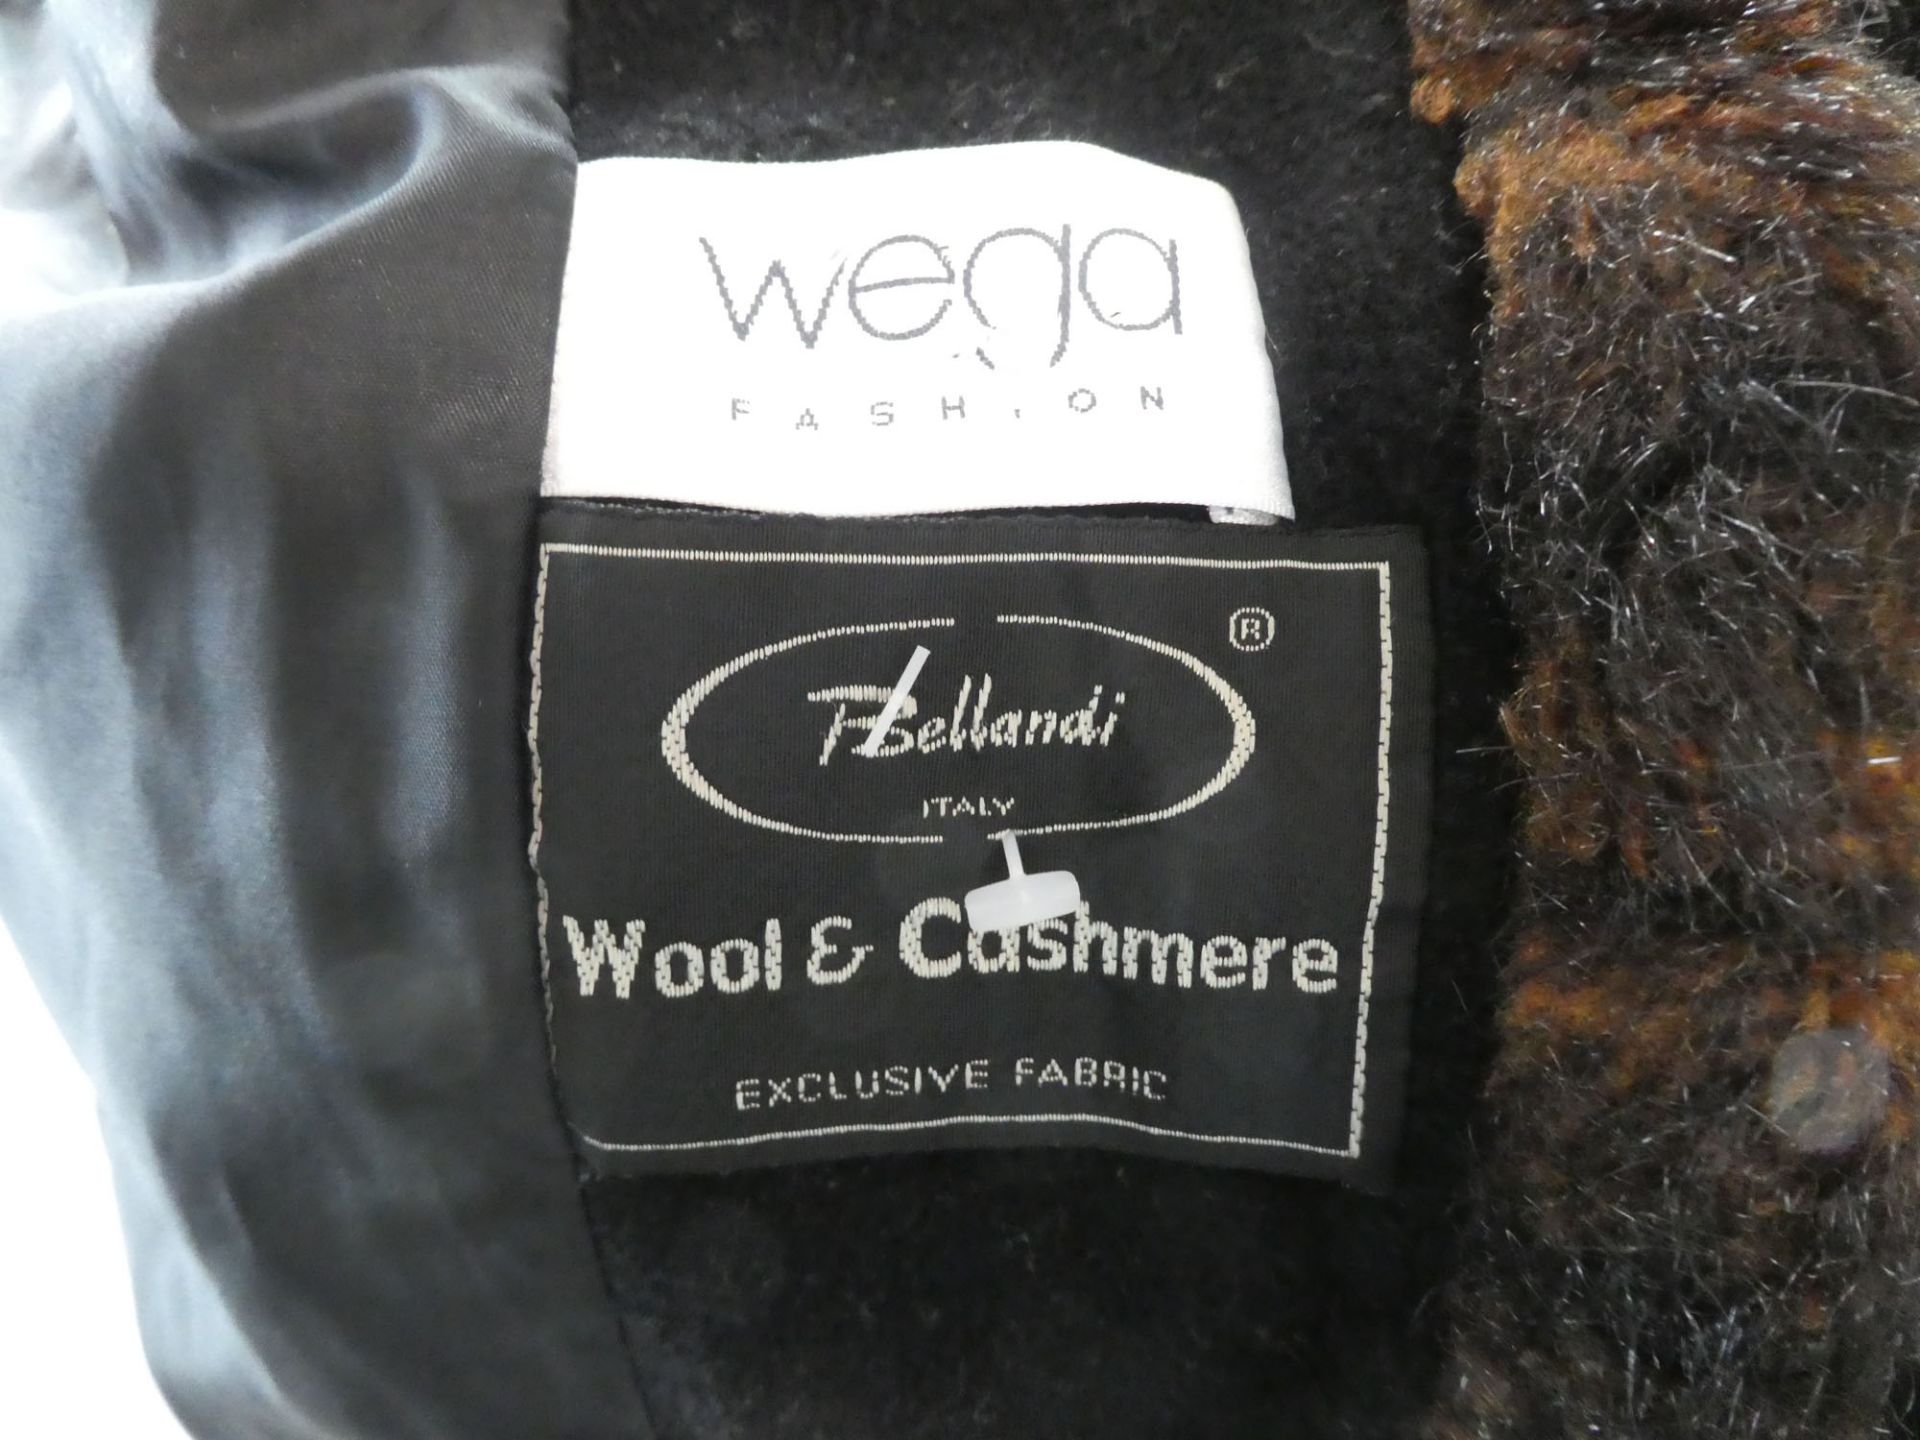 Wega Bellandi wool & cashmere jacket approx size S - Image 2 of 2